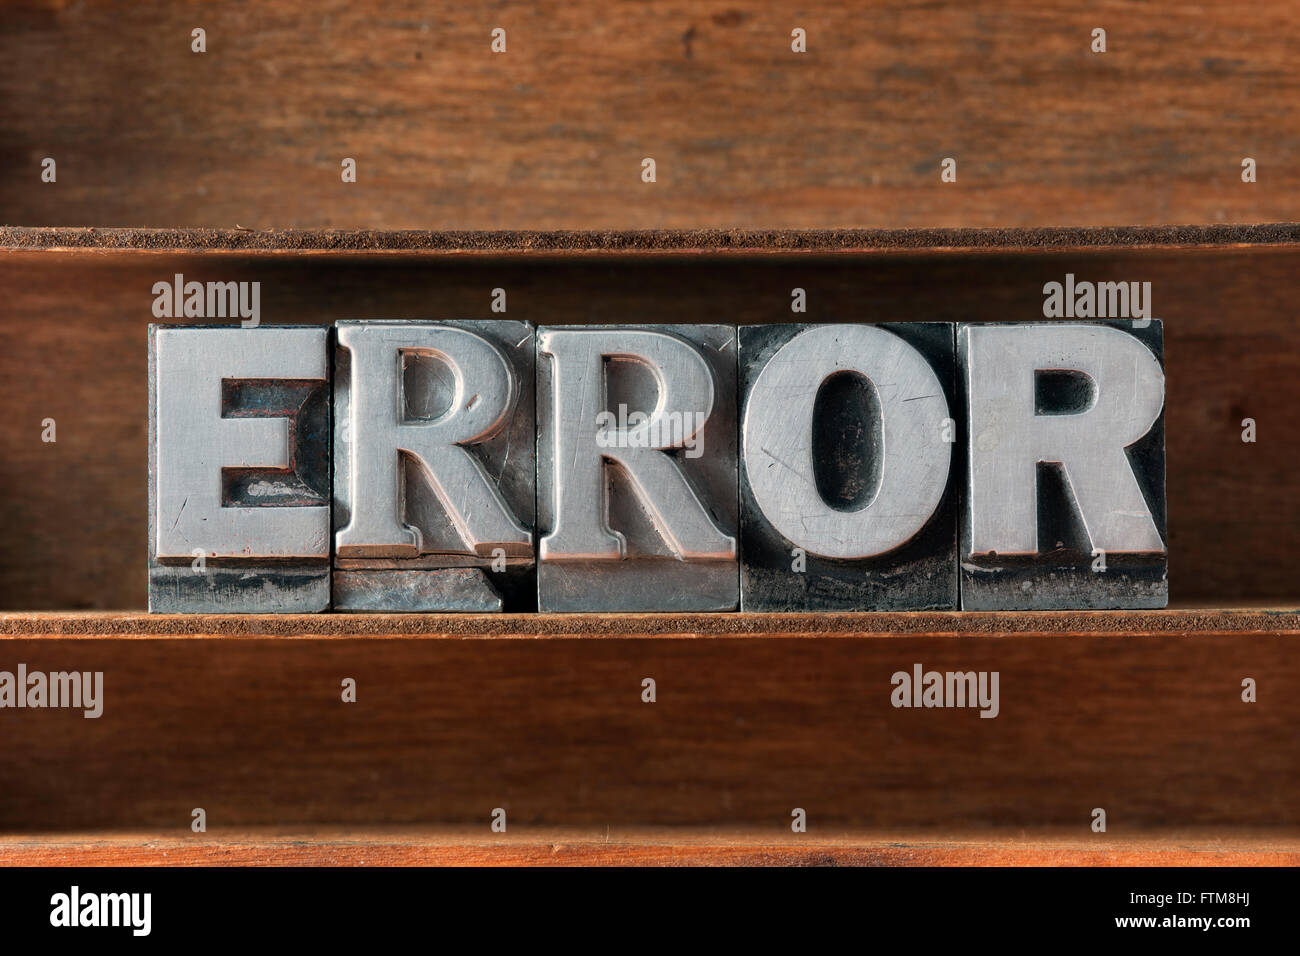 error word made from metallic letterpress type on wooden tray Stock Photo